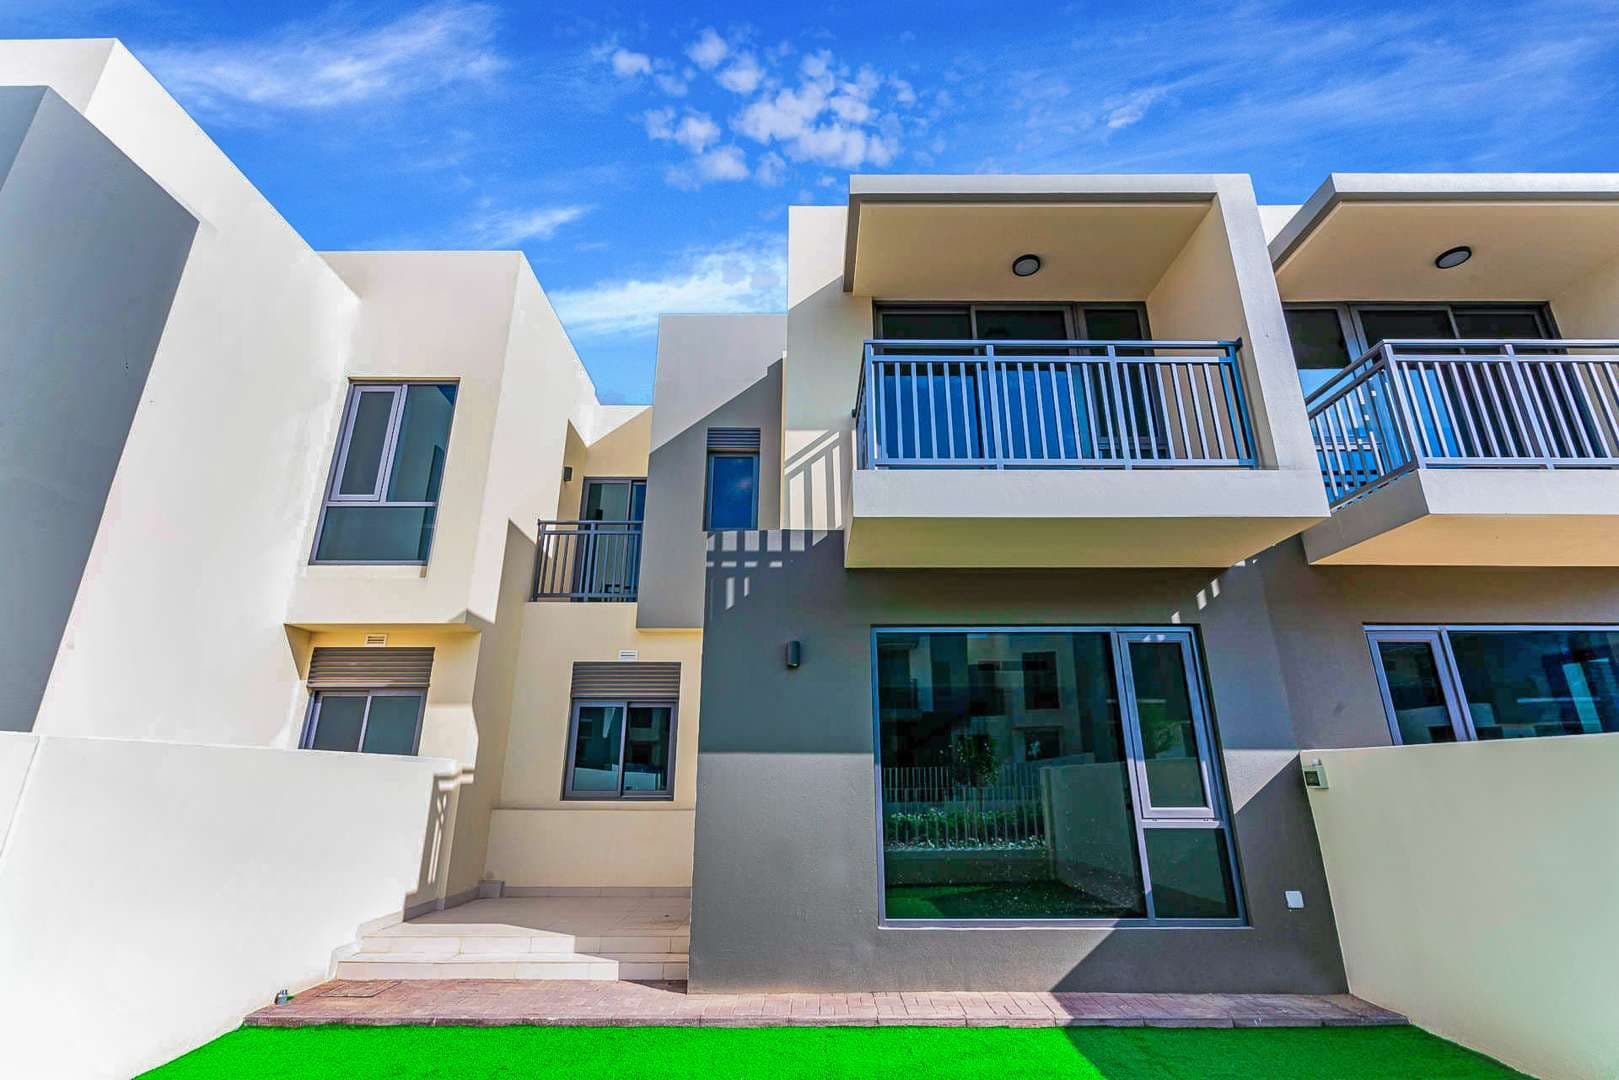 3 Bedroom Villa For Sale Maple At Dubai Hills Estate Lp10994 2d9074fbe94ee800.jpg